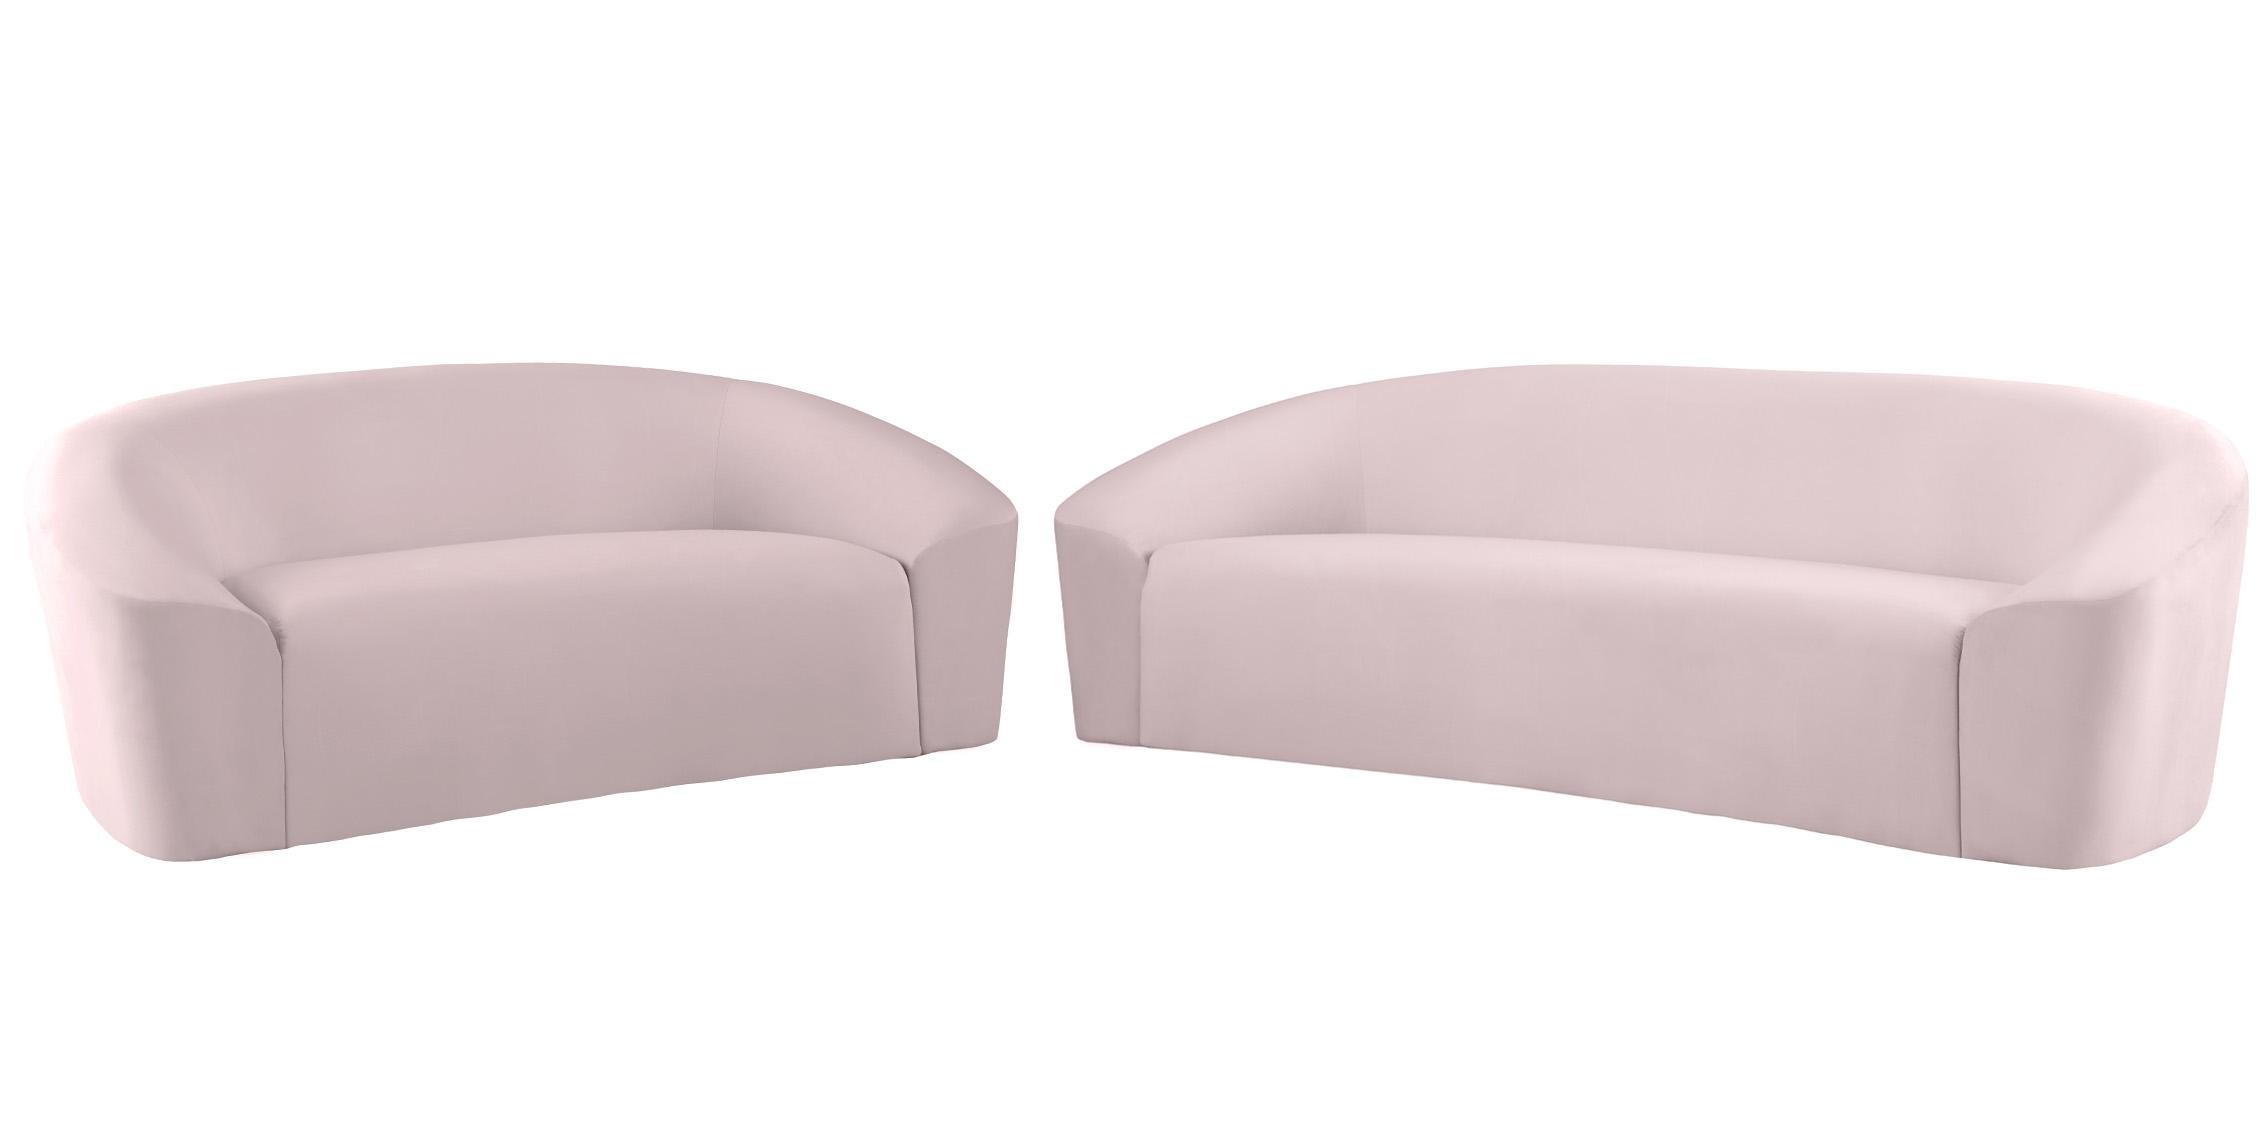 

    
610Pink-S-Set-3 Pink Velvet Sofa Set 3Pcs RILEY 610Pink-S Meridian Contemporary Modern
